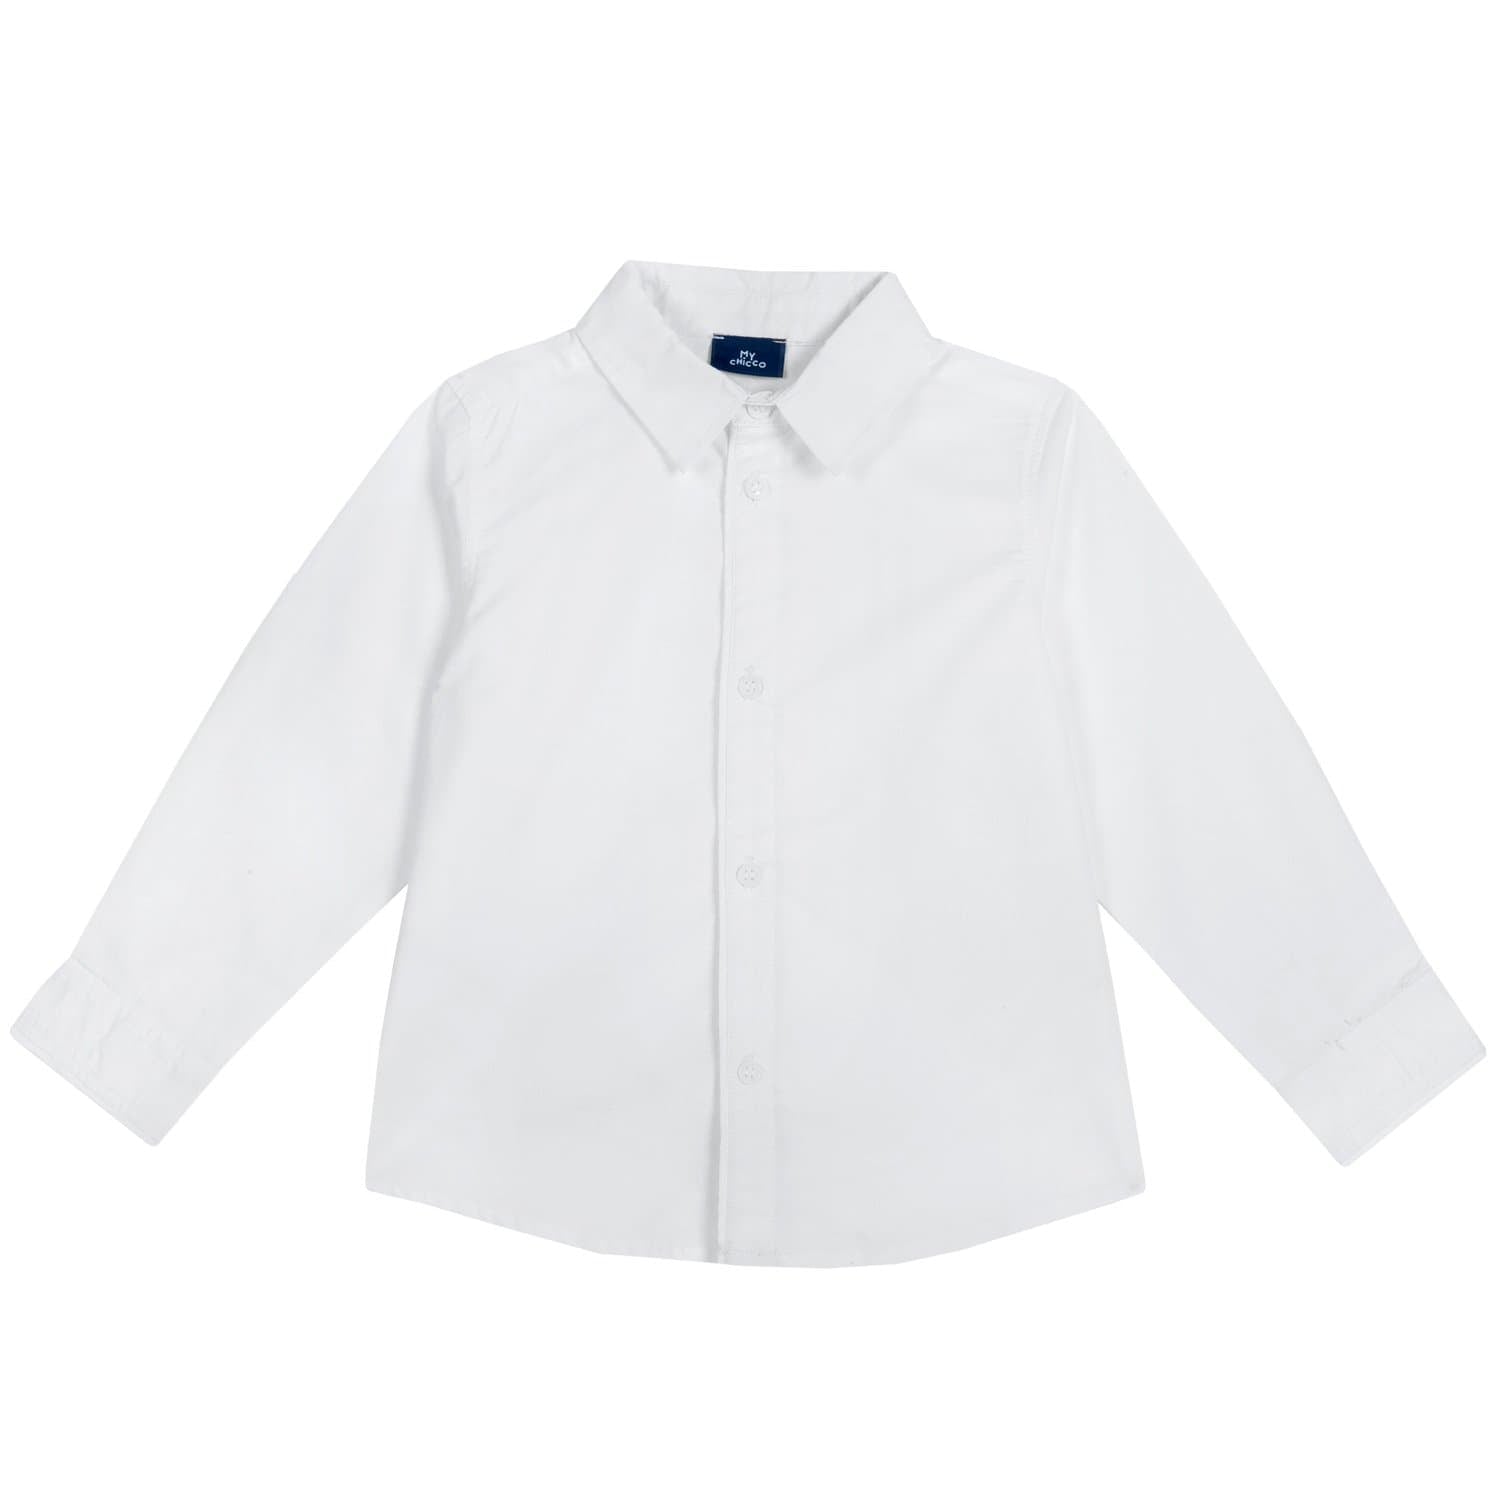 Chicco-Long-Sleeve-Shirt-White-09054532000000-033-092